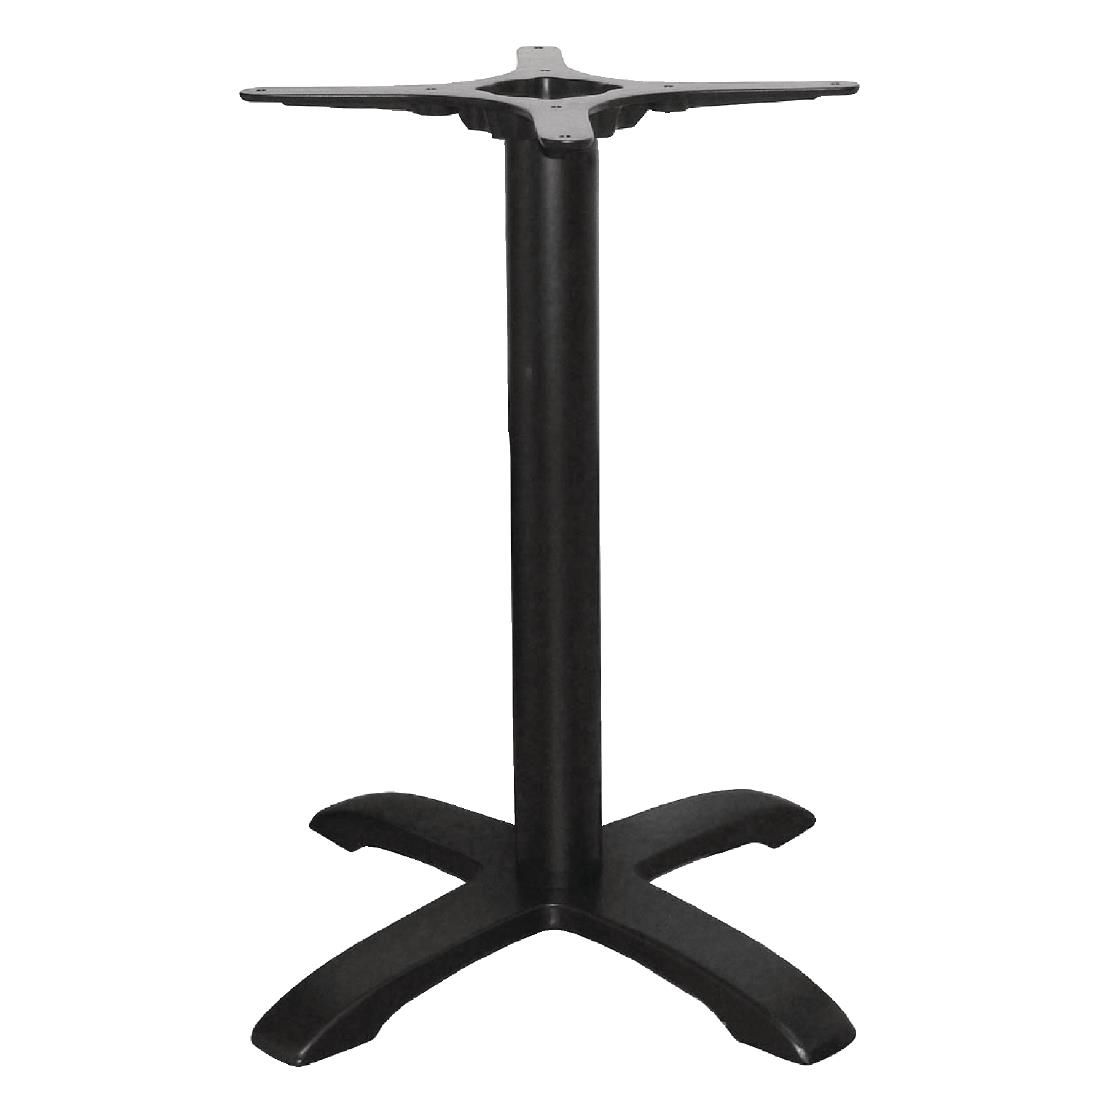 MACROCARPA CAFE TABLE: Pedestal Leg